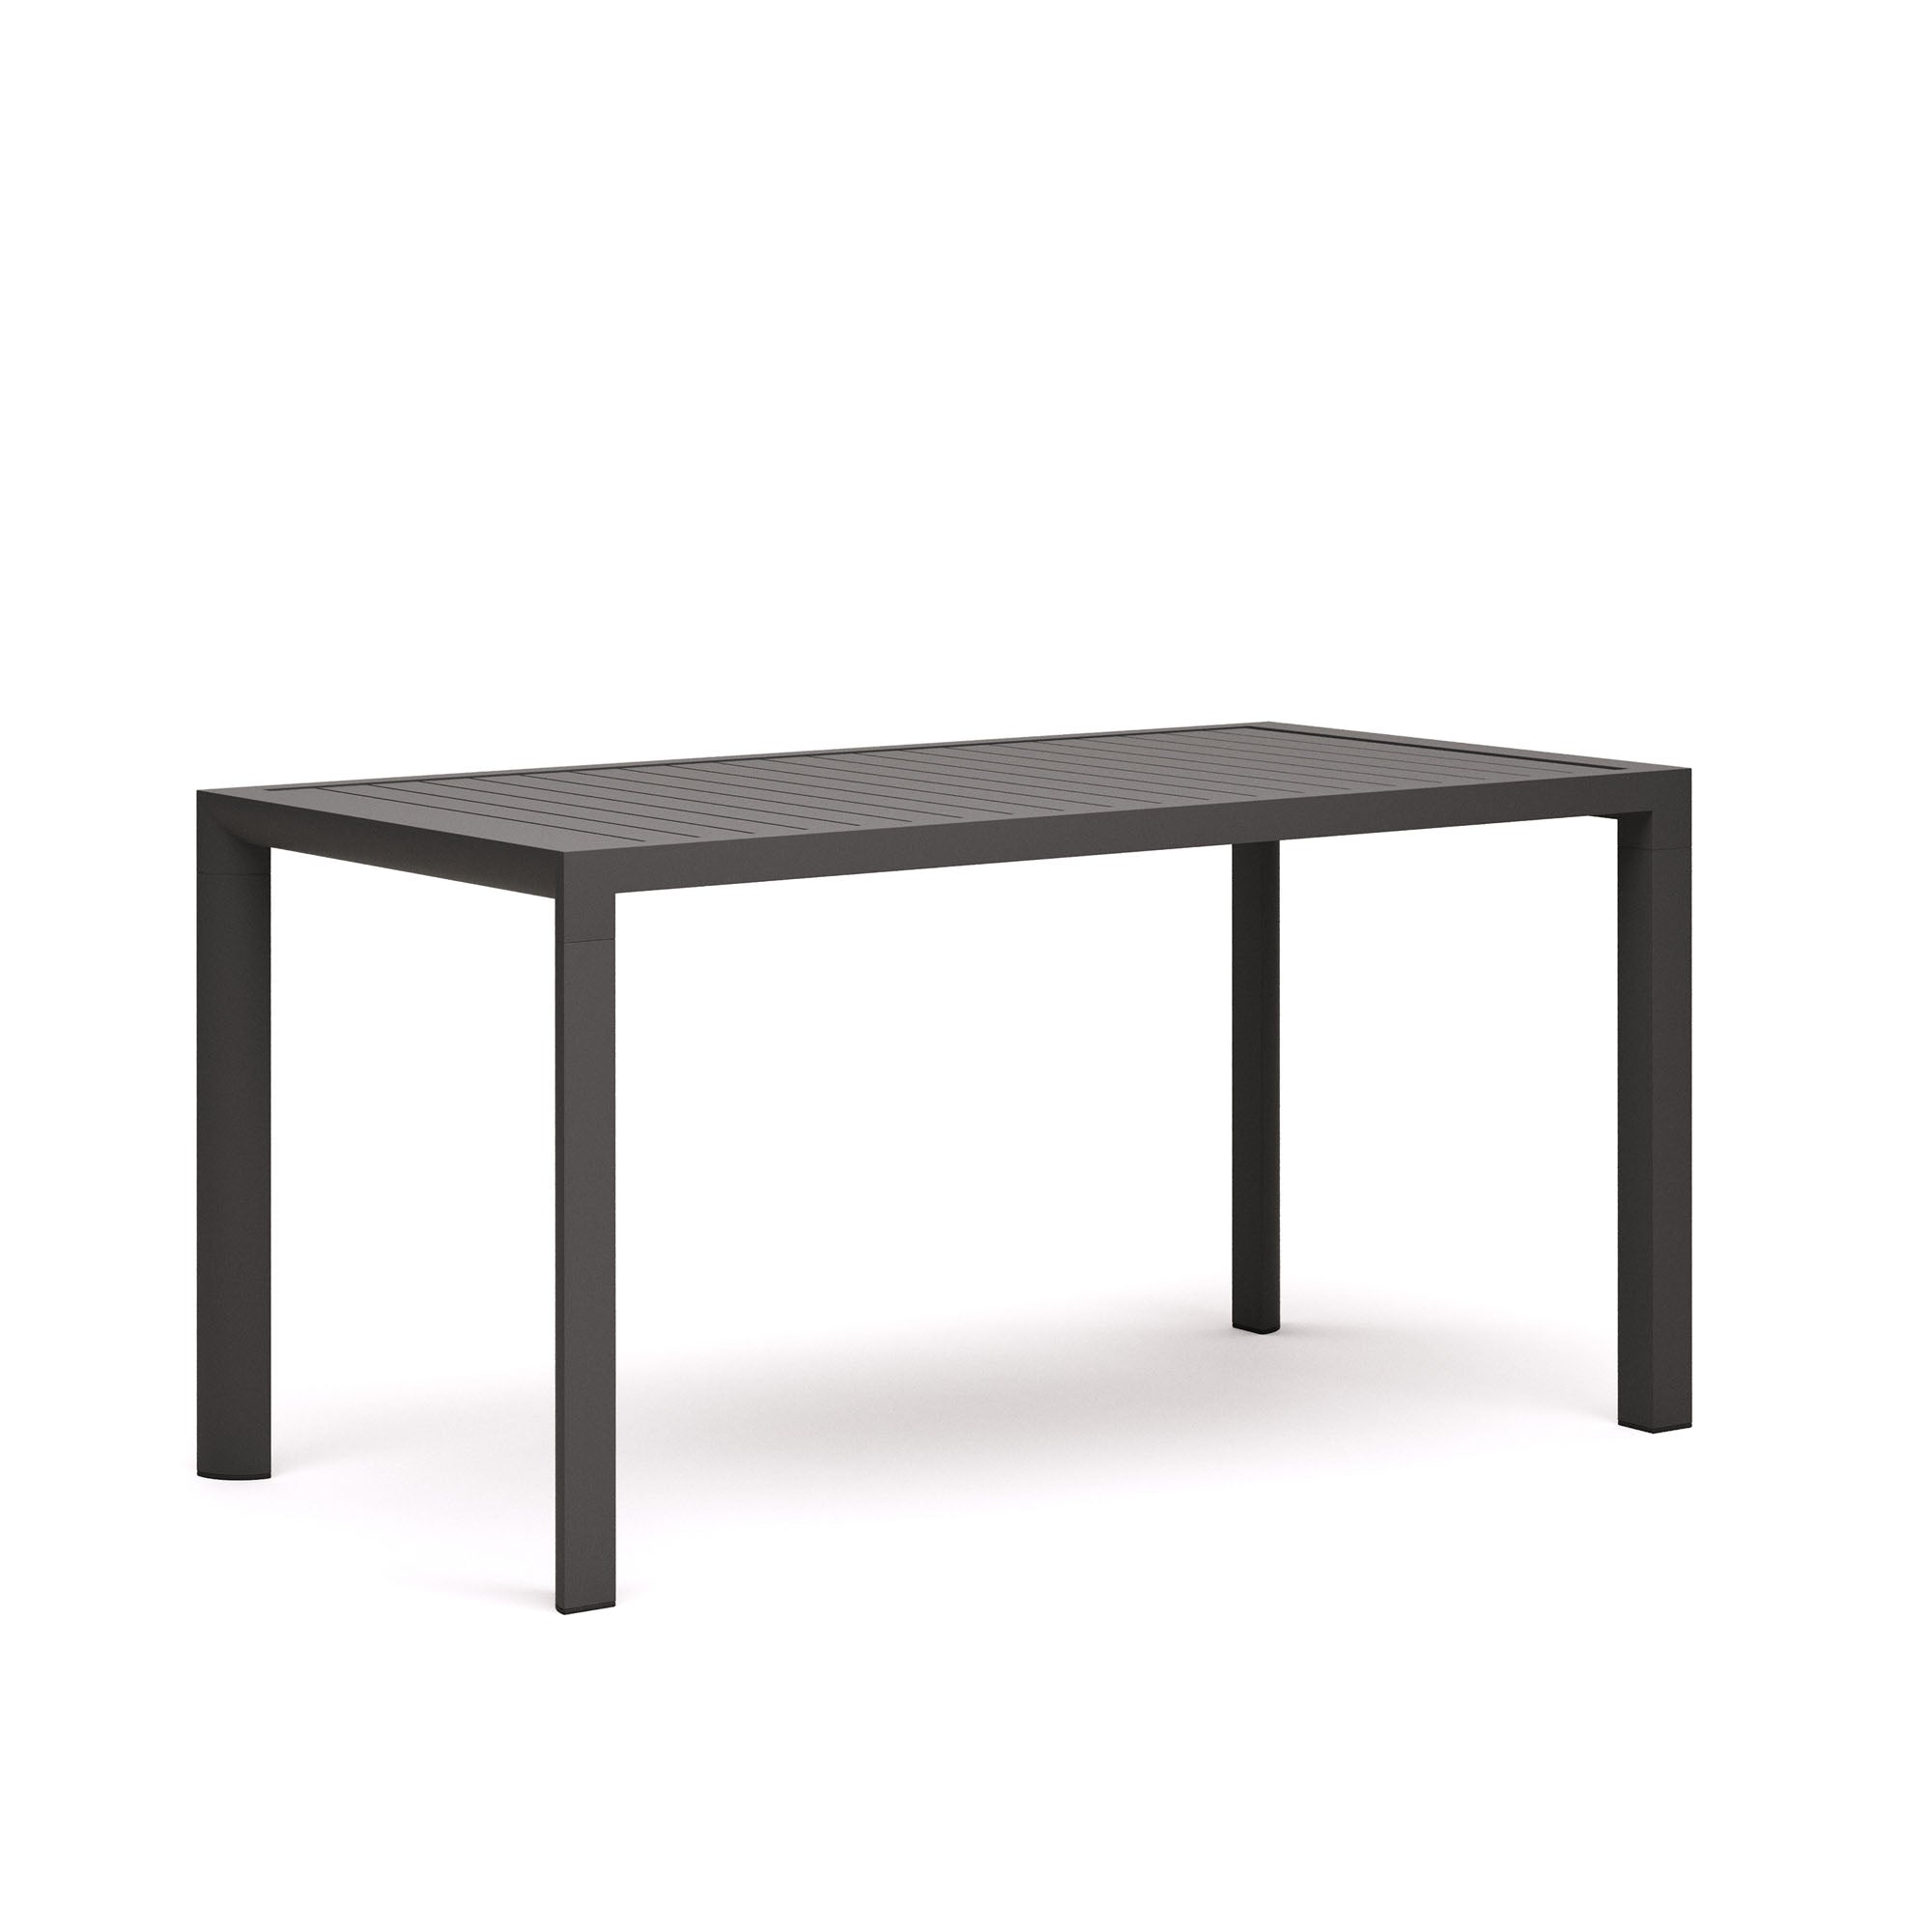 Culip aluminium outdoor table in powder coated grey finish, 150 x 77 cm